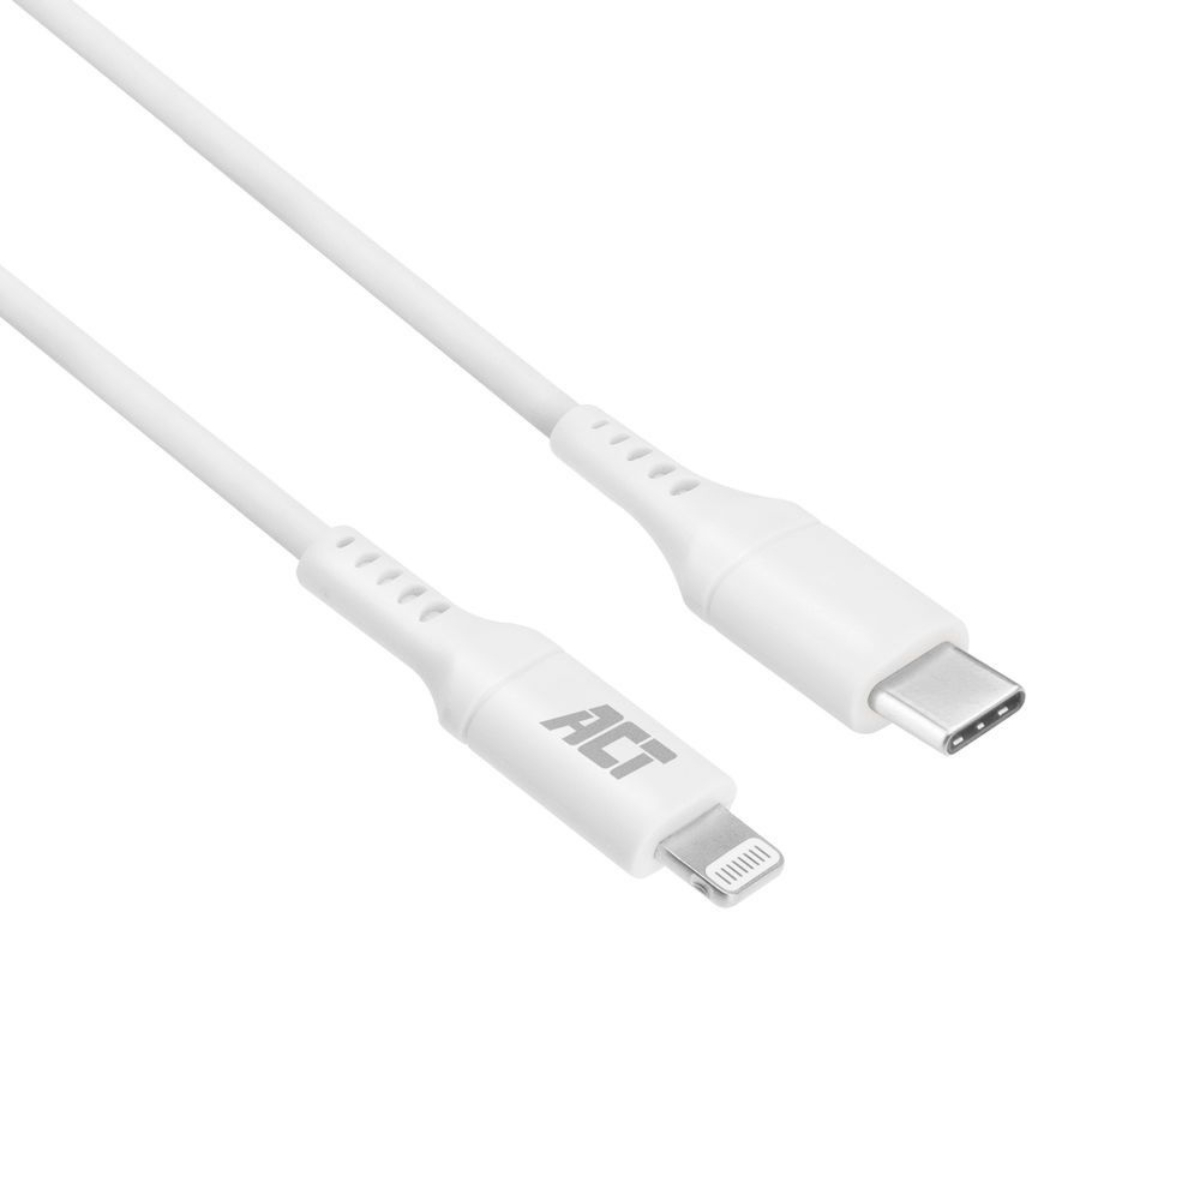 MFI Kabel USB AC3015 zertifiziert ACT